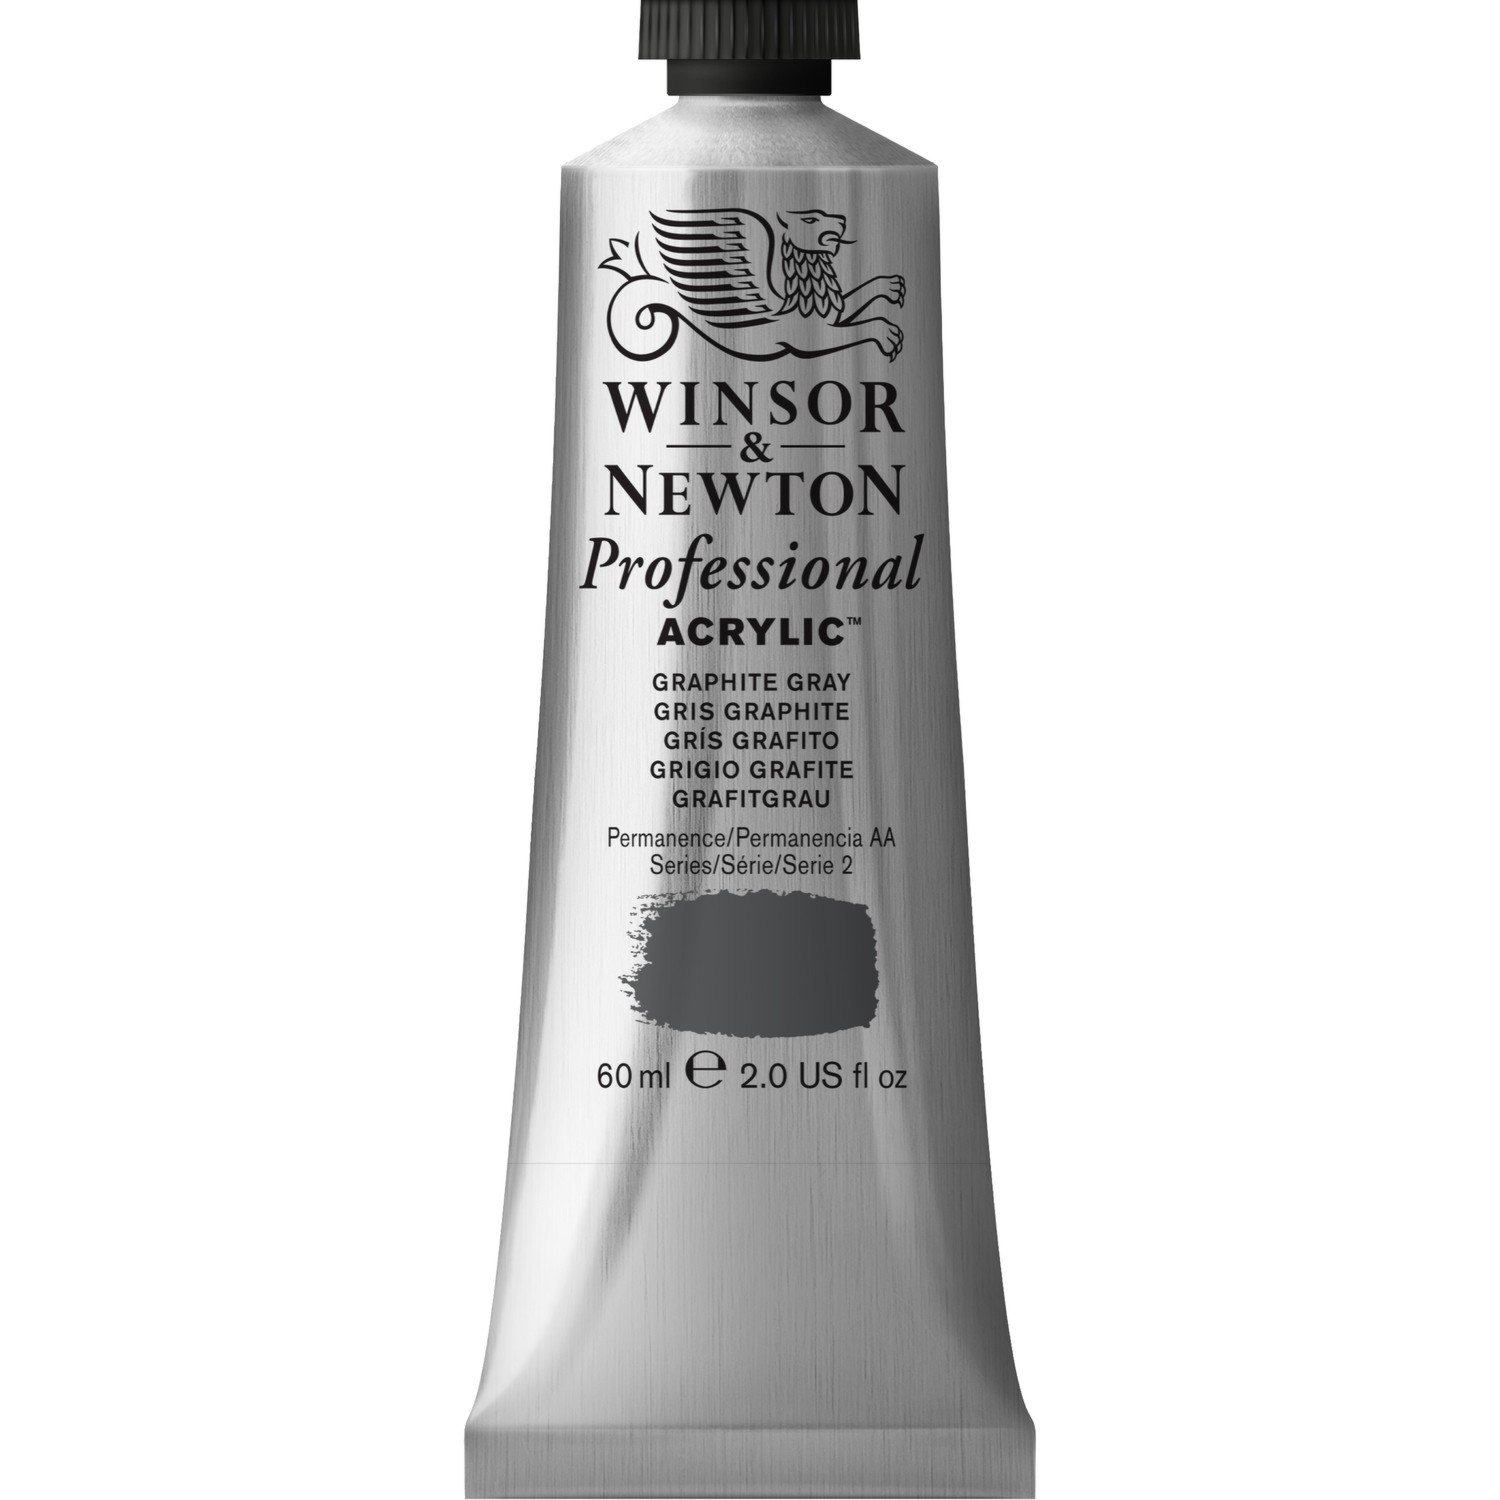 Winsor and Newton 60ml Professional Acrylic Paint - Graphite Grey Image 1